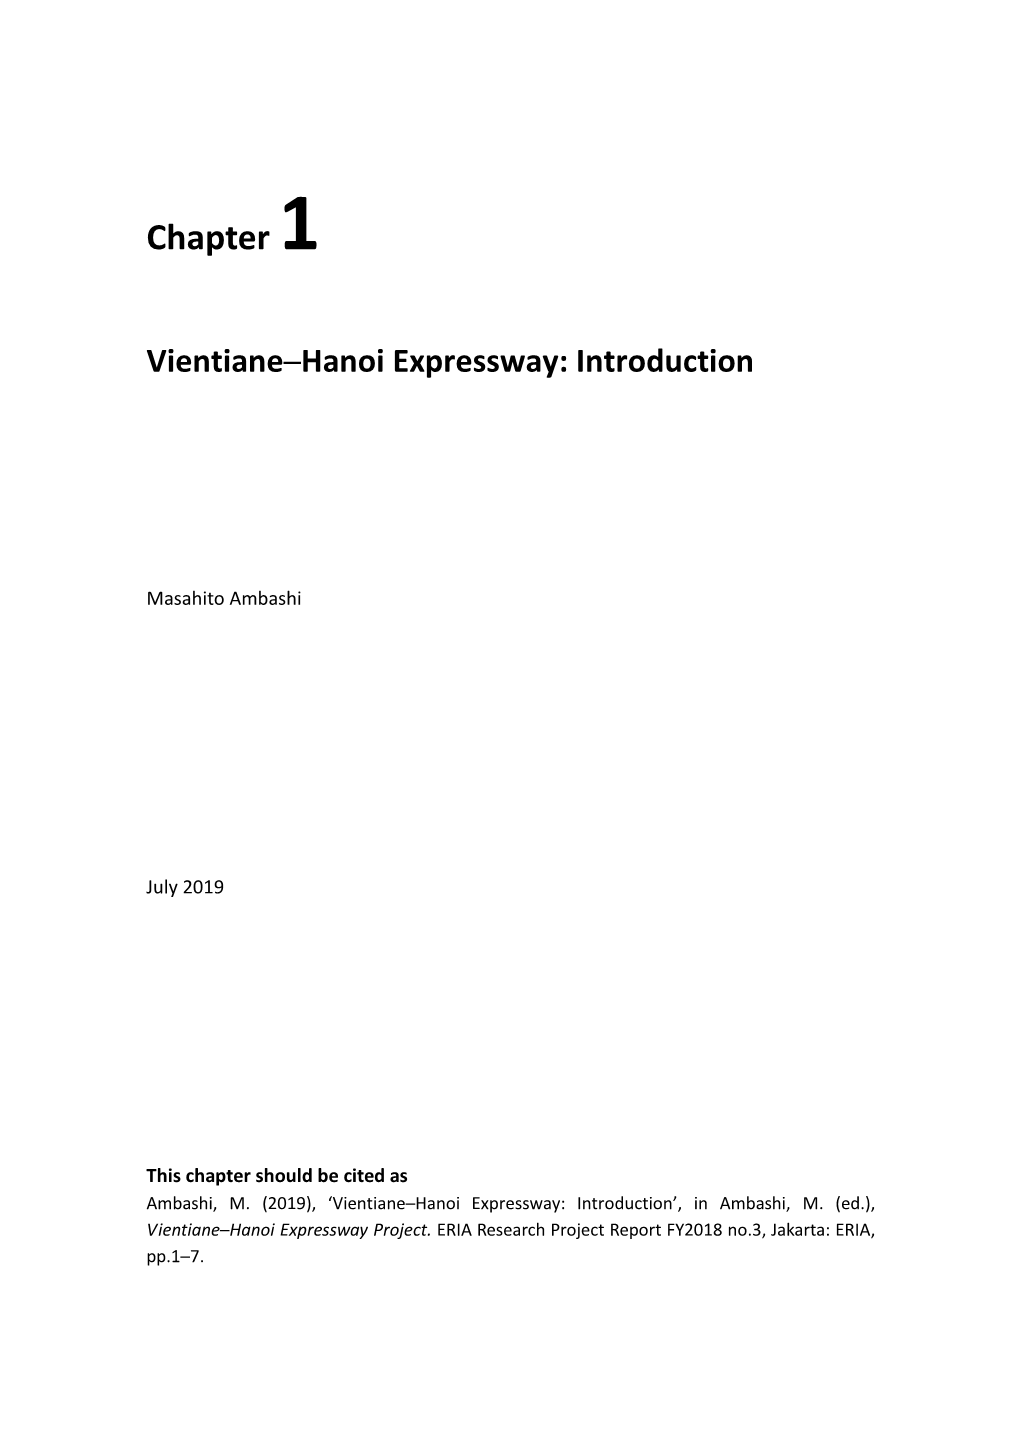 Chapter 1. Vientiane Hanoi Expressway: Introduction